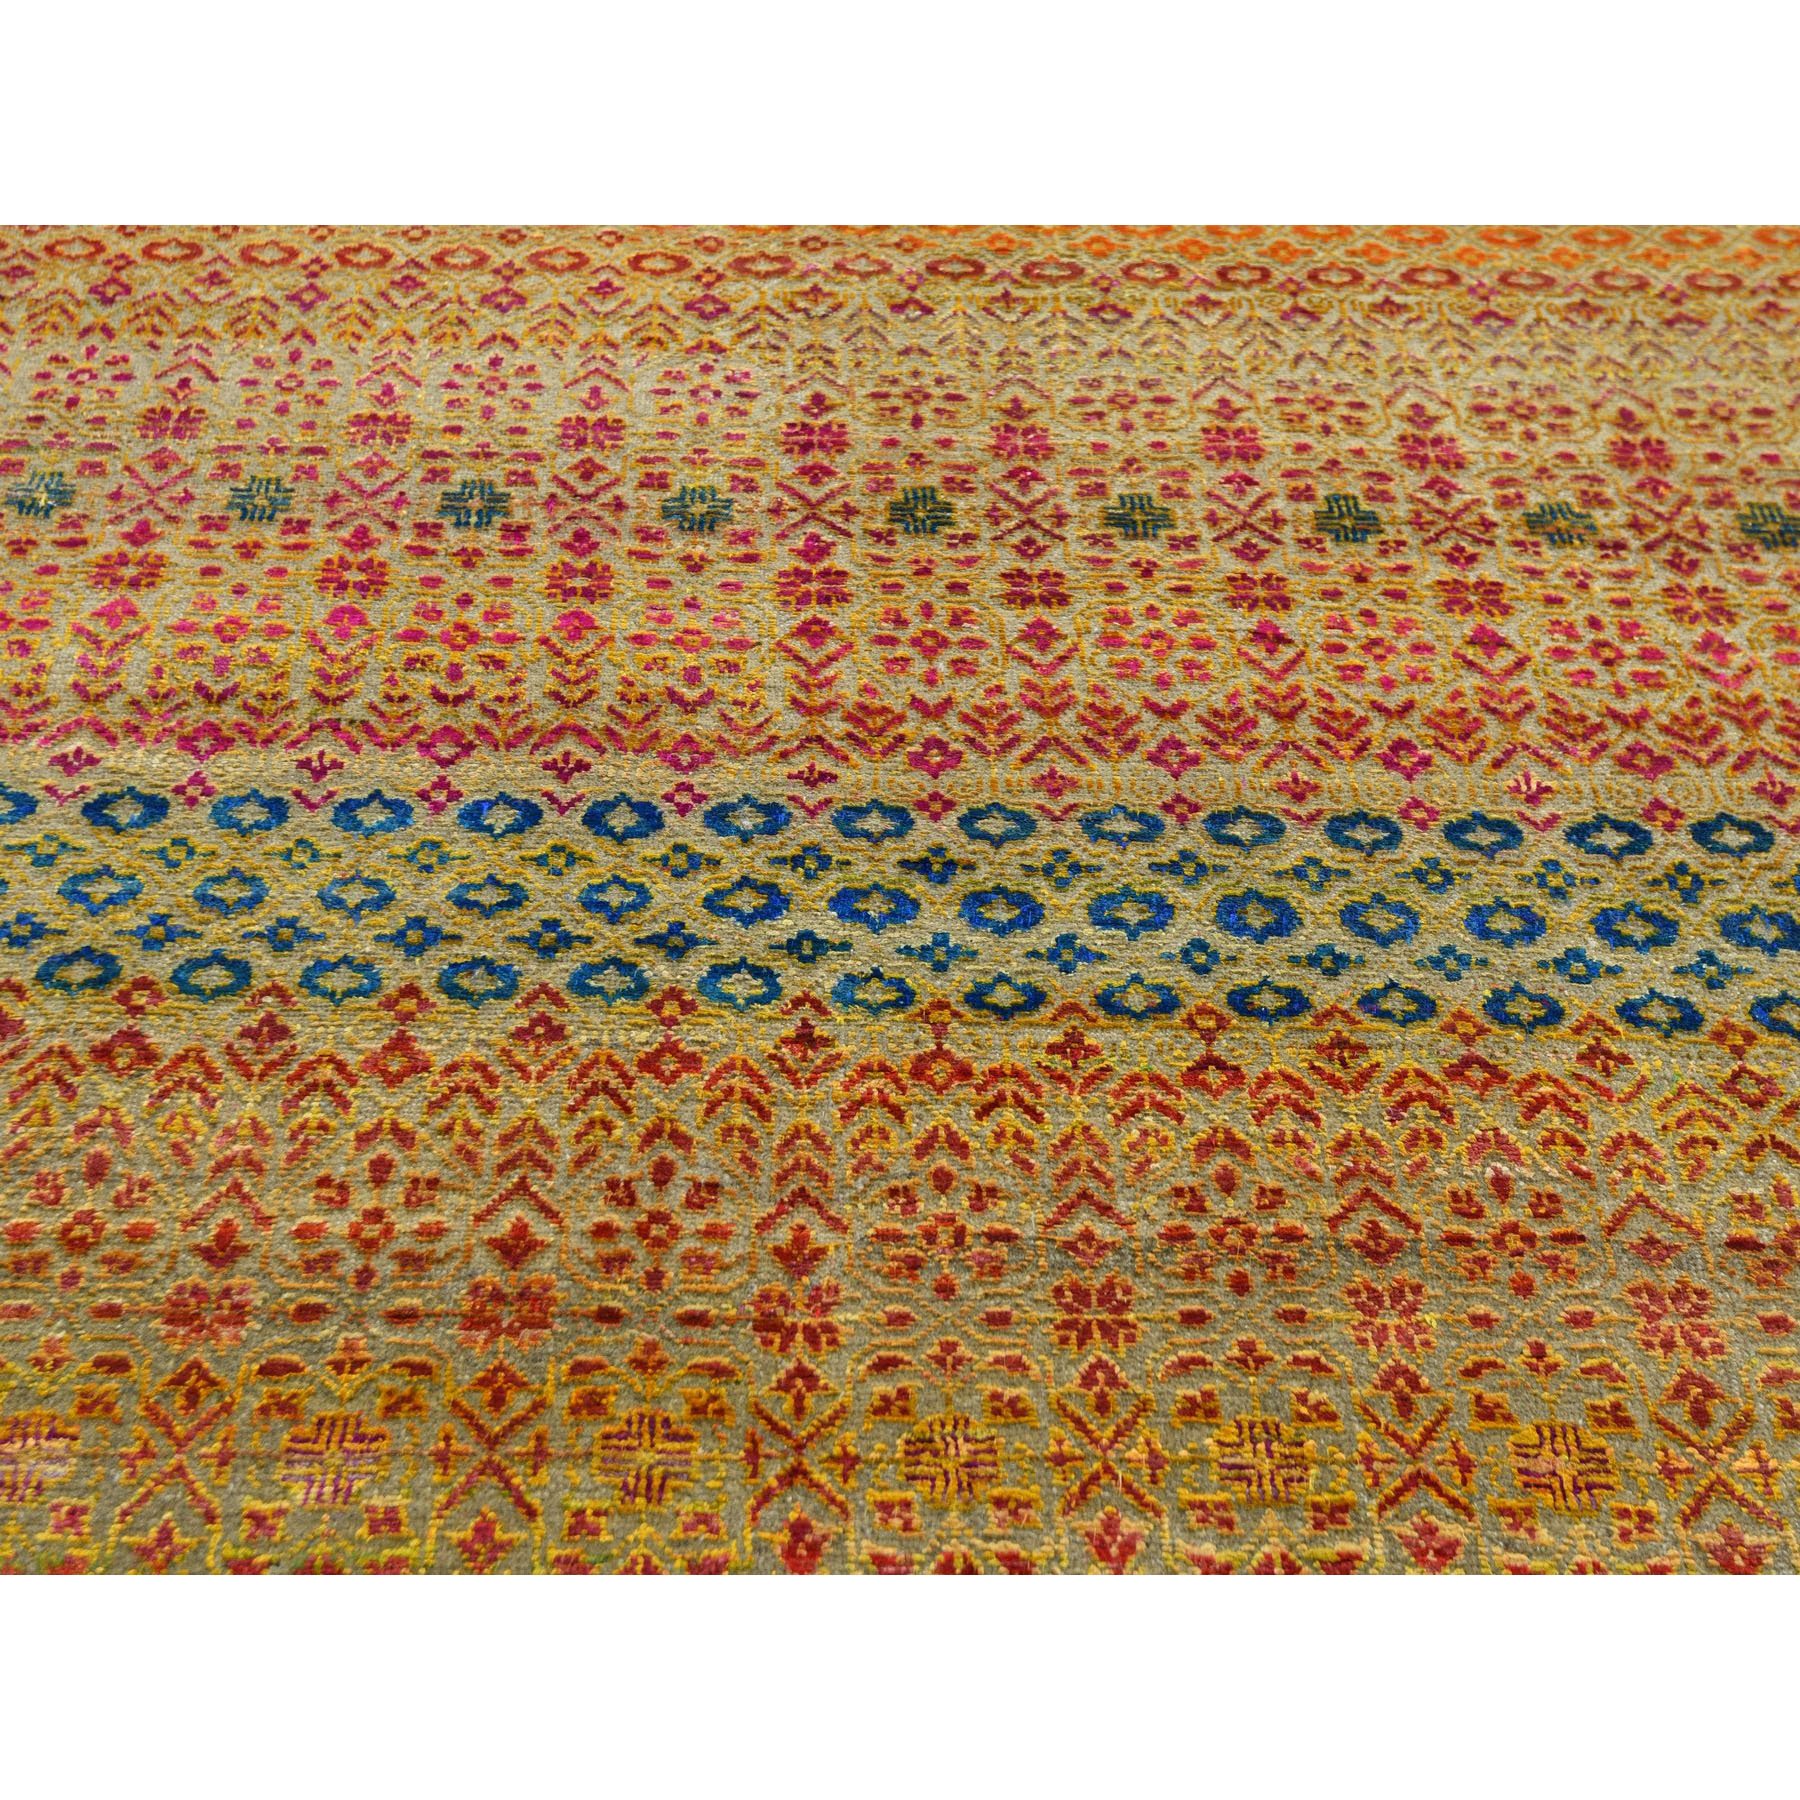 8-10 x12- Colorful Grass Design Sari Silk Textured Wool Modern Hand Knotted Oriental Rug 